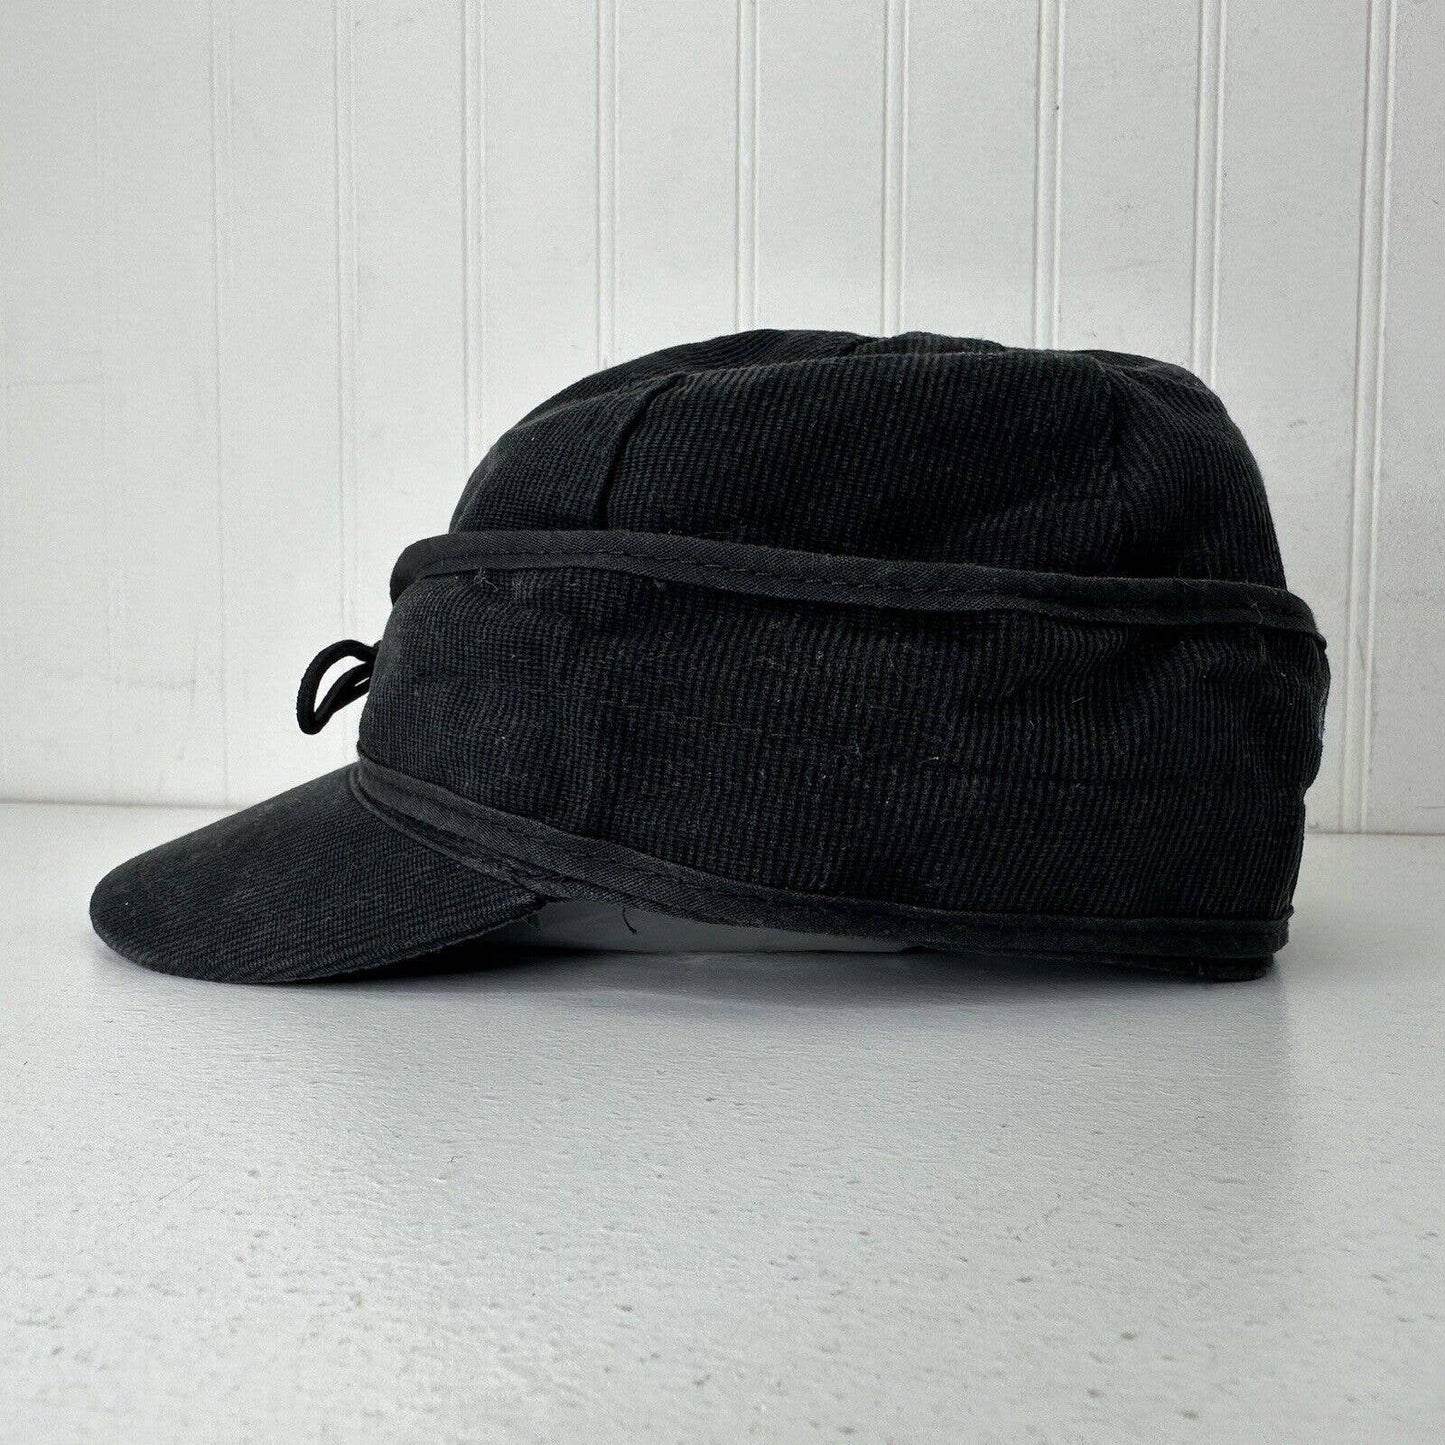 Stormy Kromer Hat Size 6 1/2 (52 Metric) Black Corduroy 100% Cotton Youth